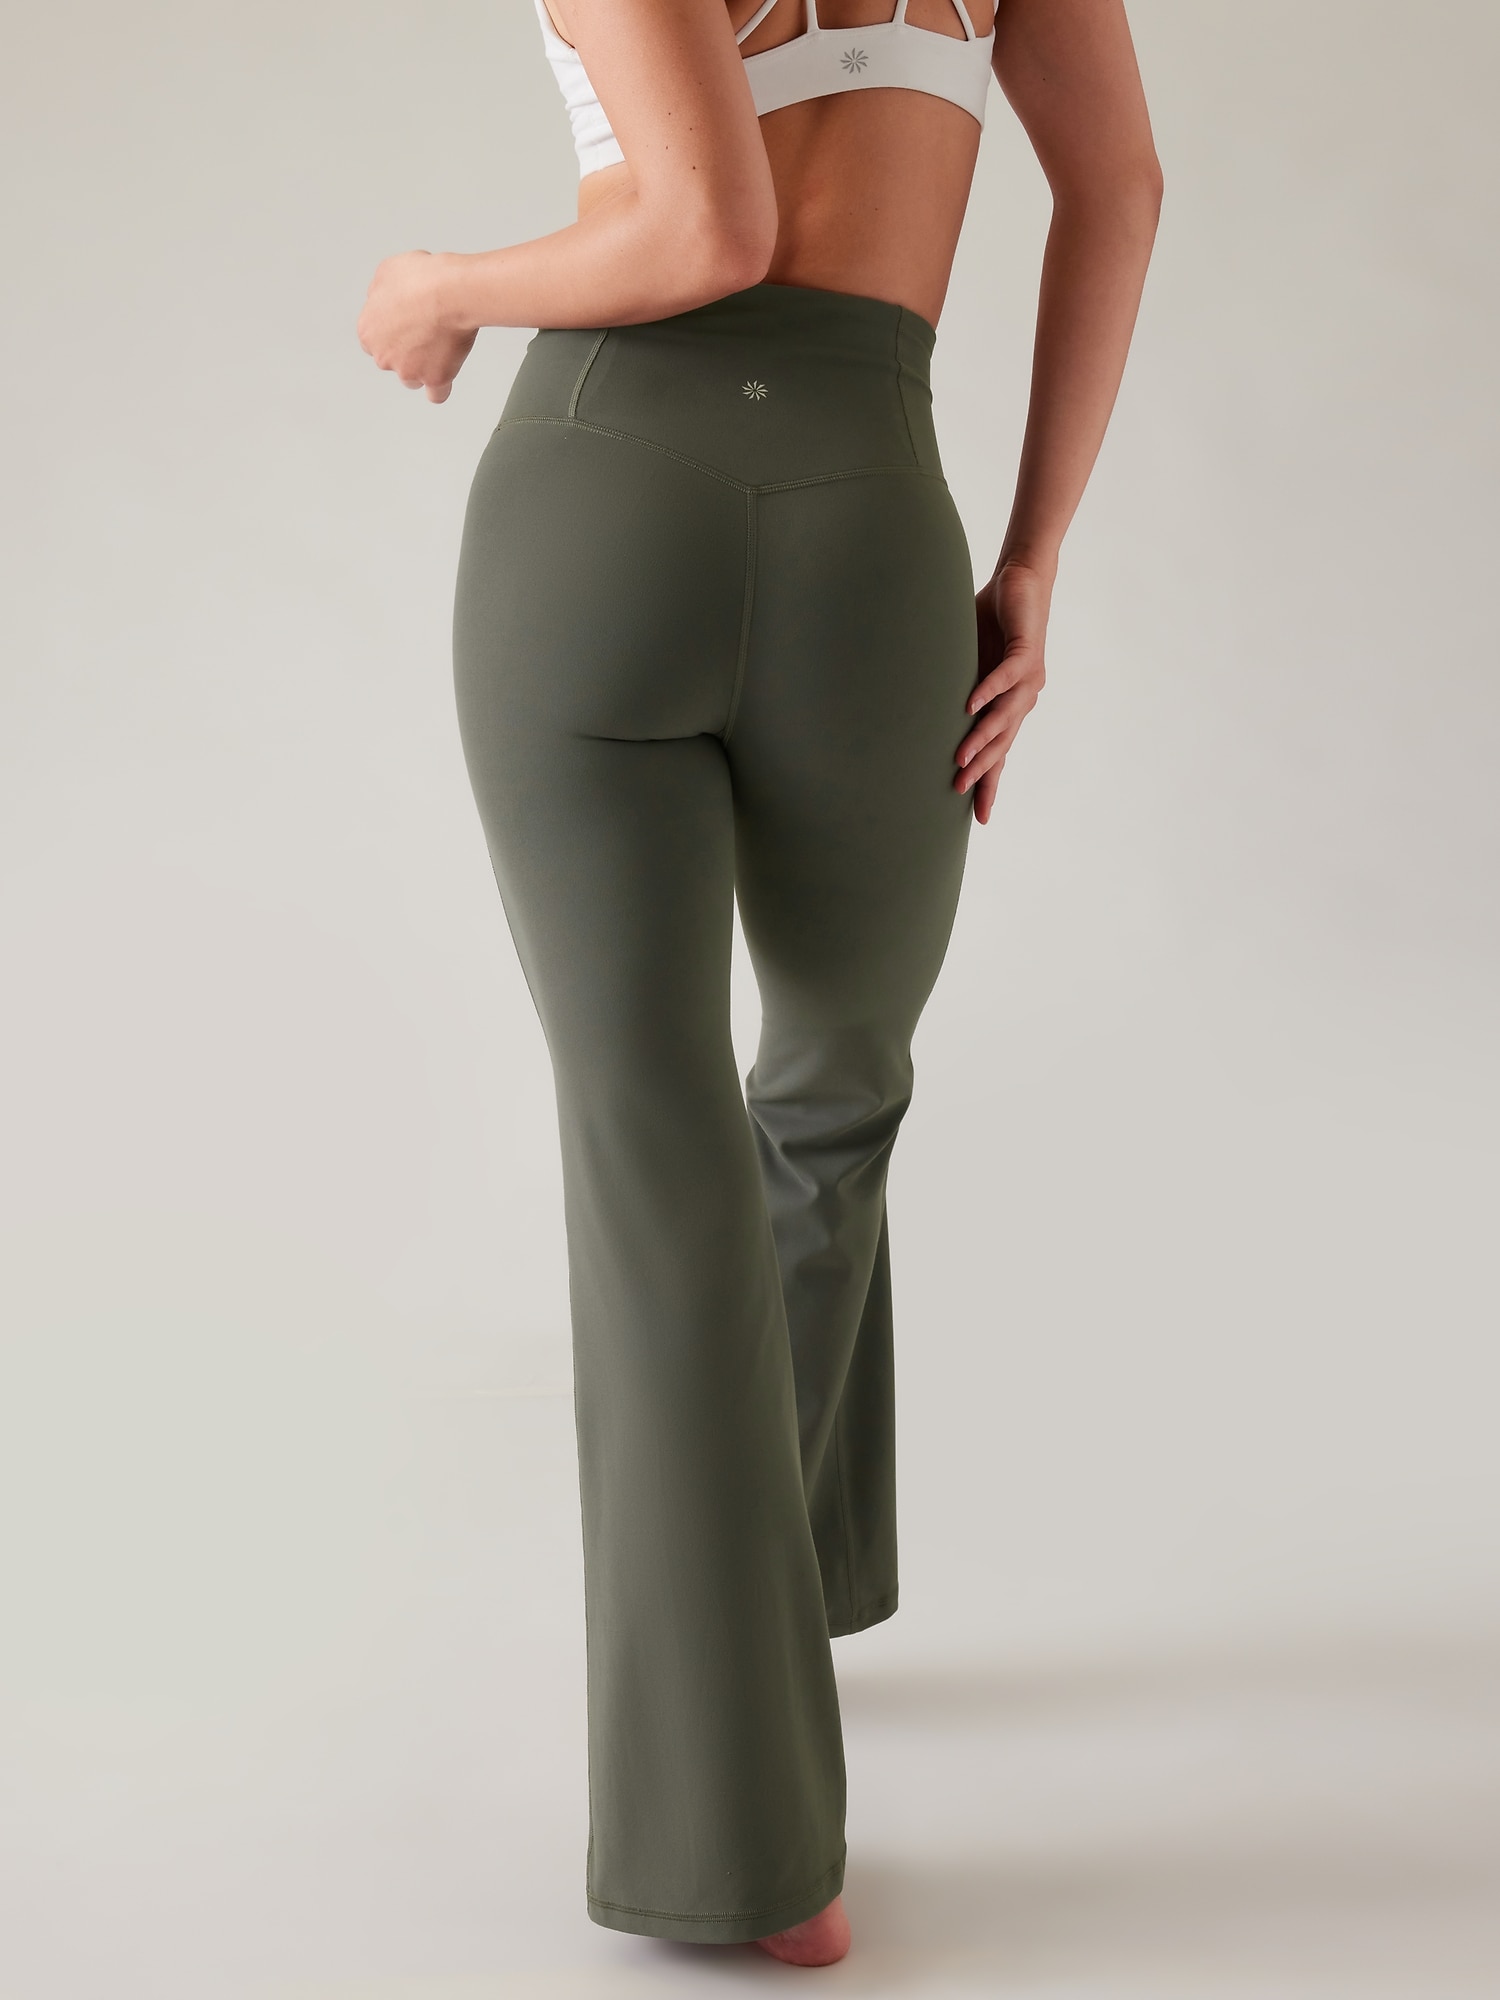 SELONE Flare Yoga Pants for Women Flared Casual Slim Fit Long Pant